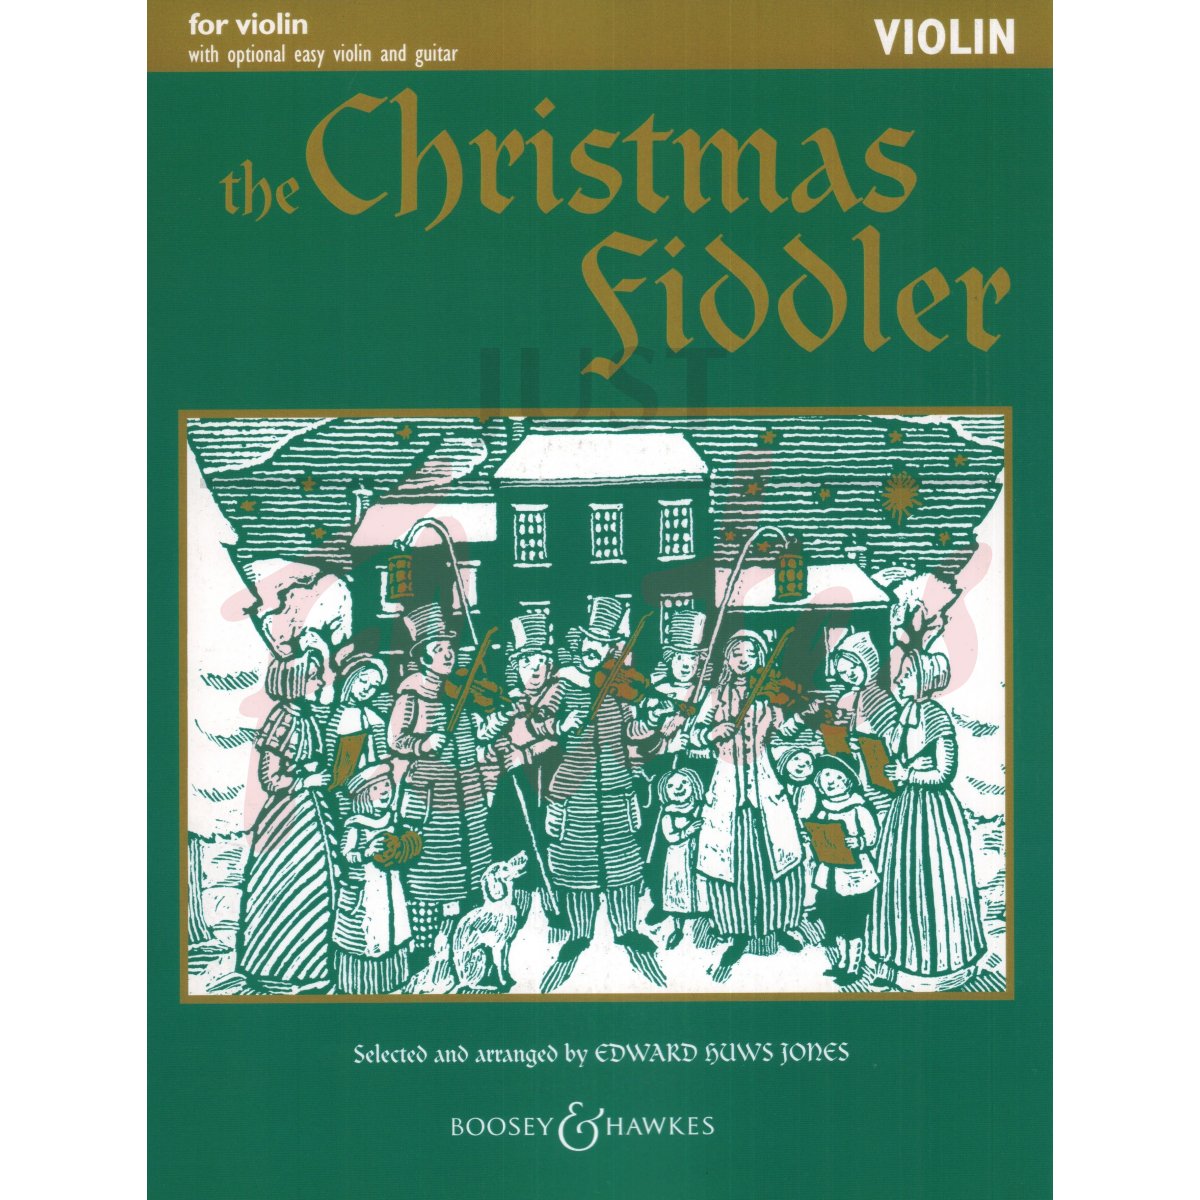 The Christmas Fiddler [Violin Part]